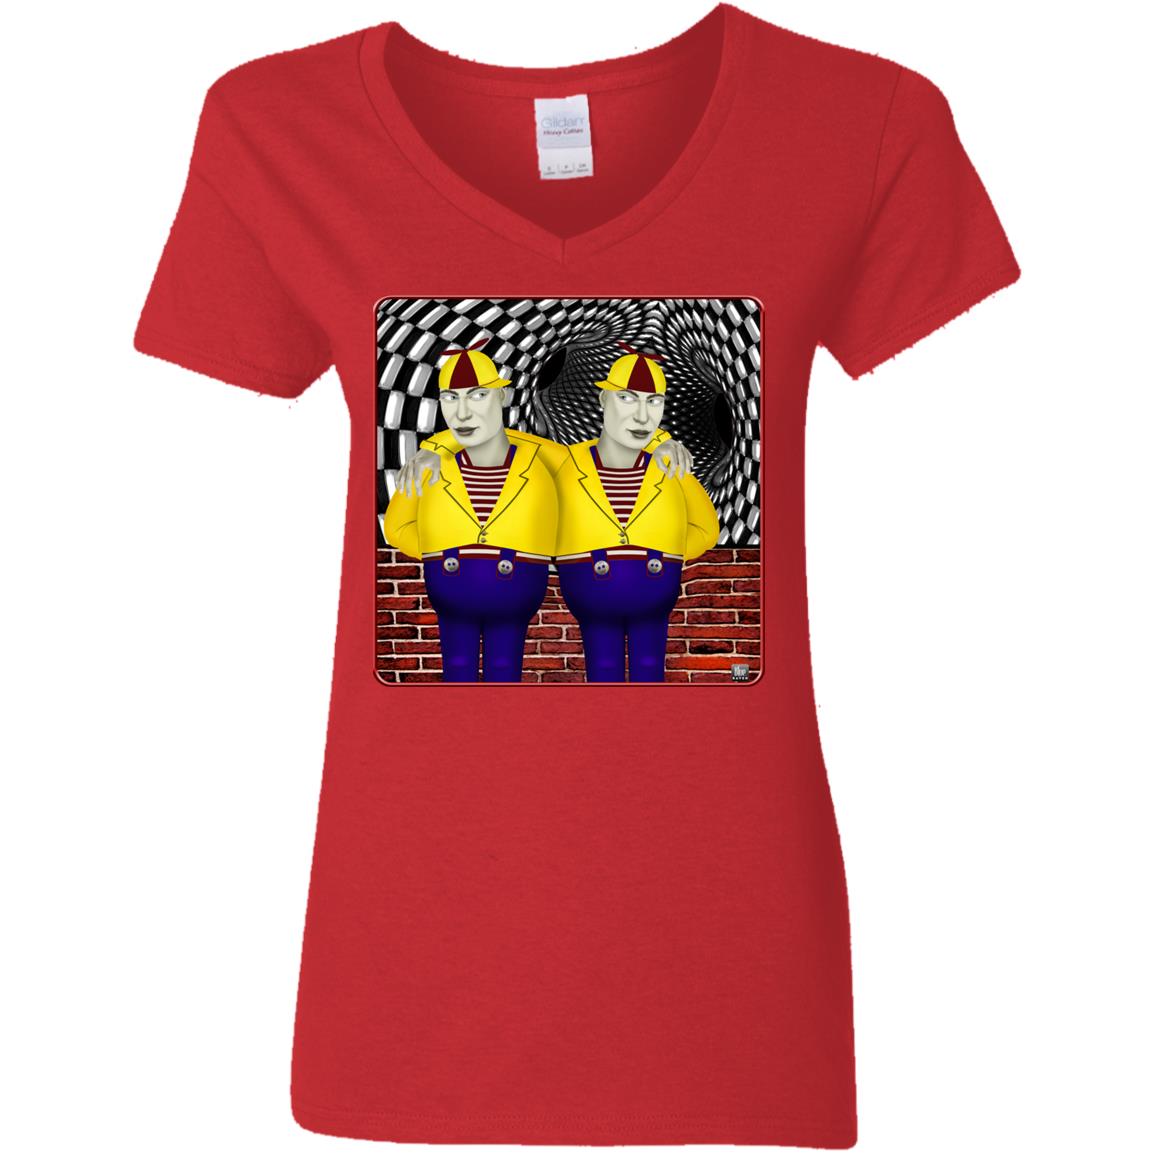 Tweedldee And Dumb - Women's V-Neck T Shirt